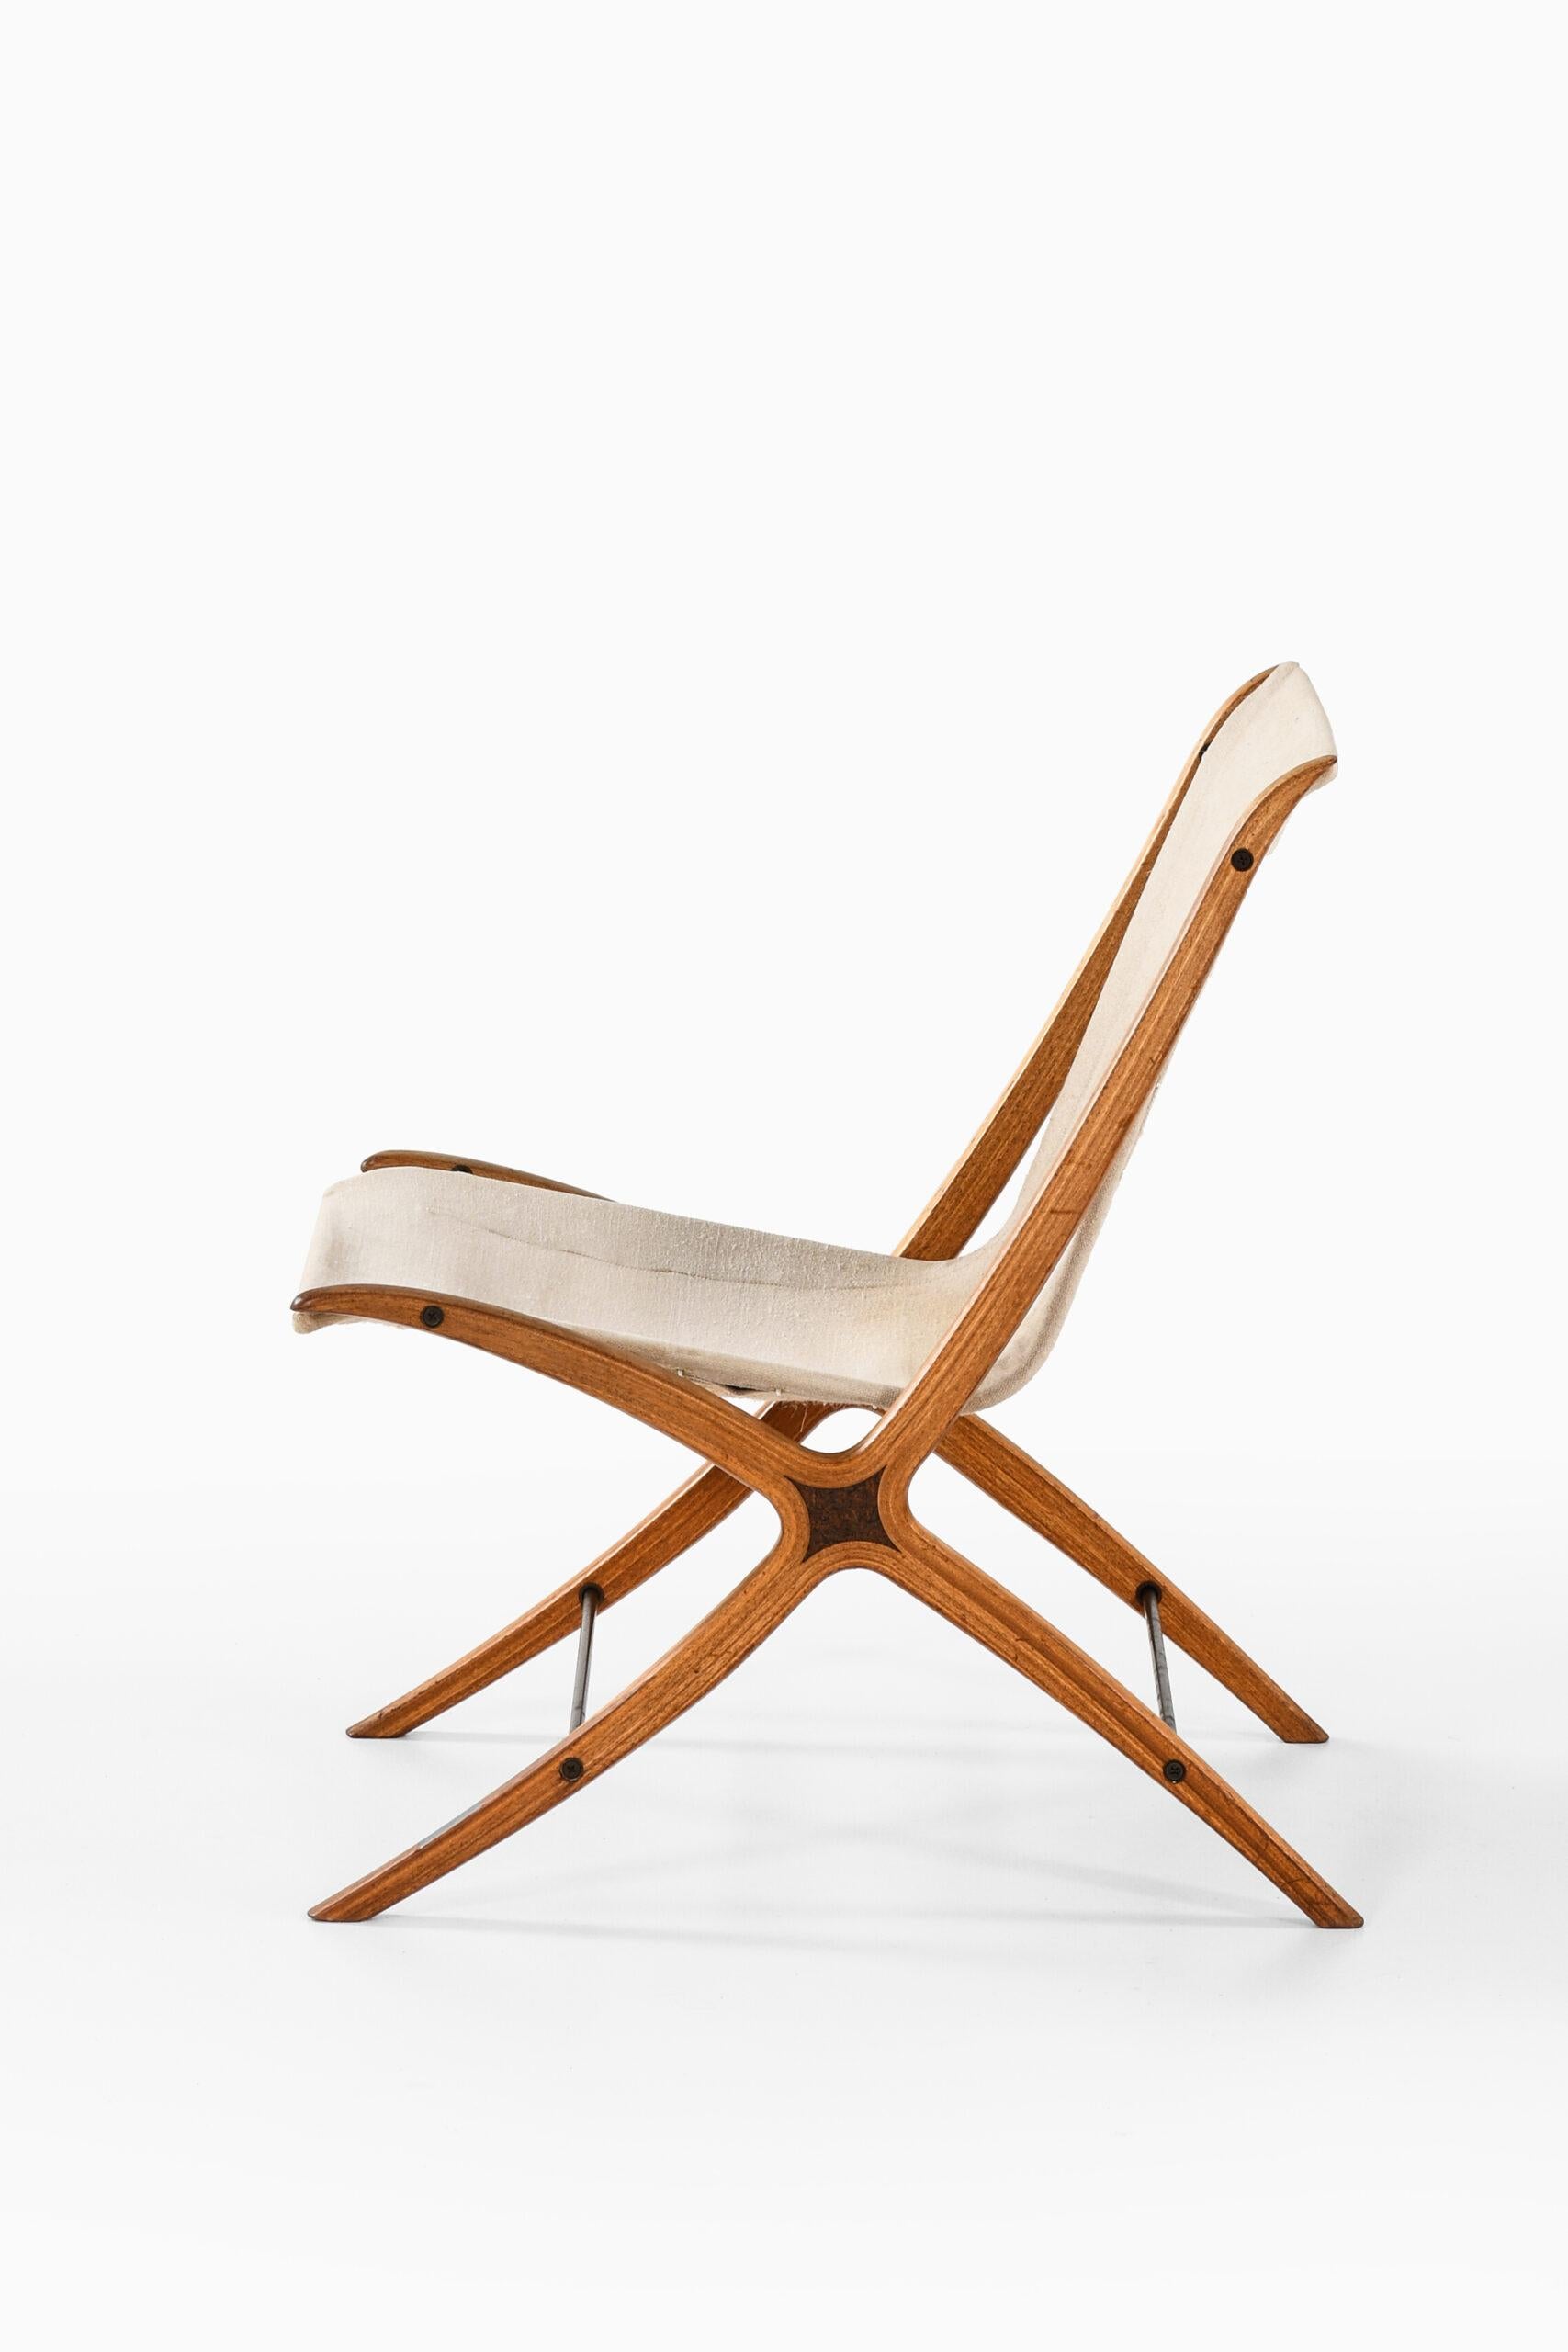 Rare easy chair model X-chair / FH-6135 designed by Peter Hvidt & Orla Mølgaard-Nielsen. Produced by Fritz Hansen in Denmark.